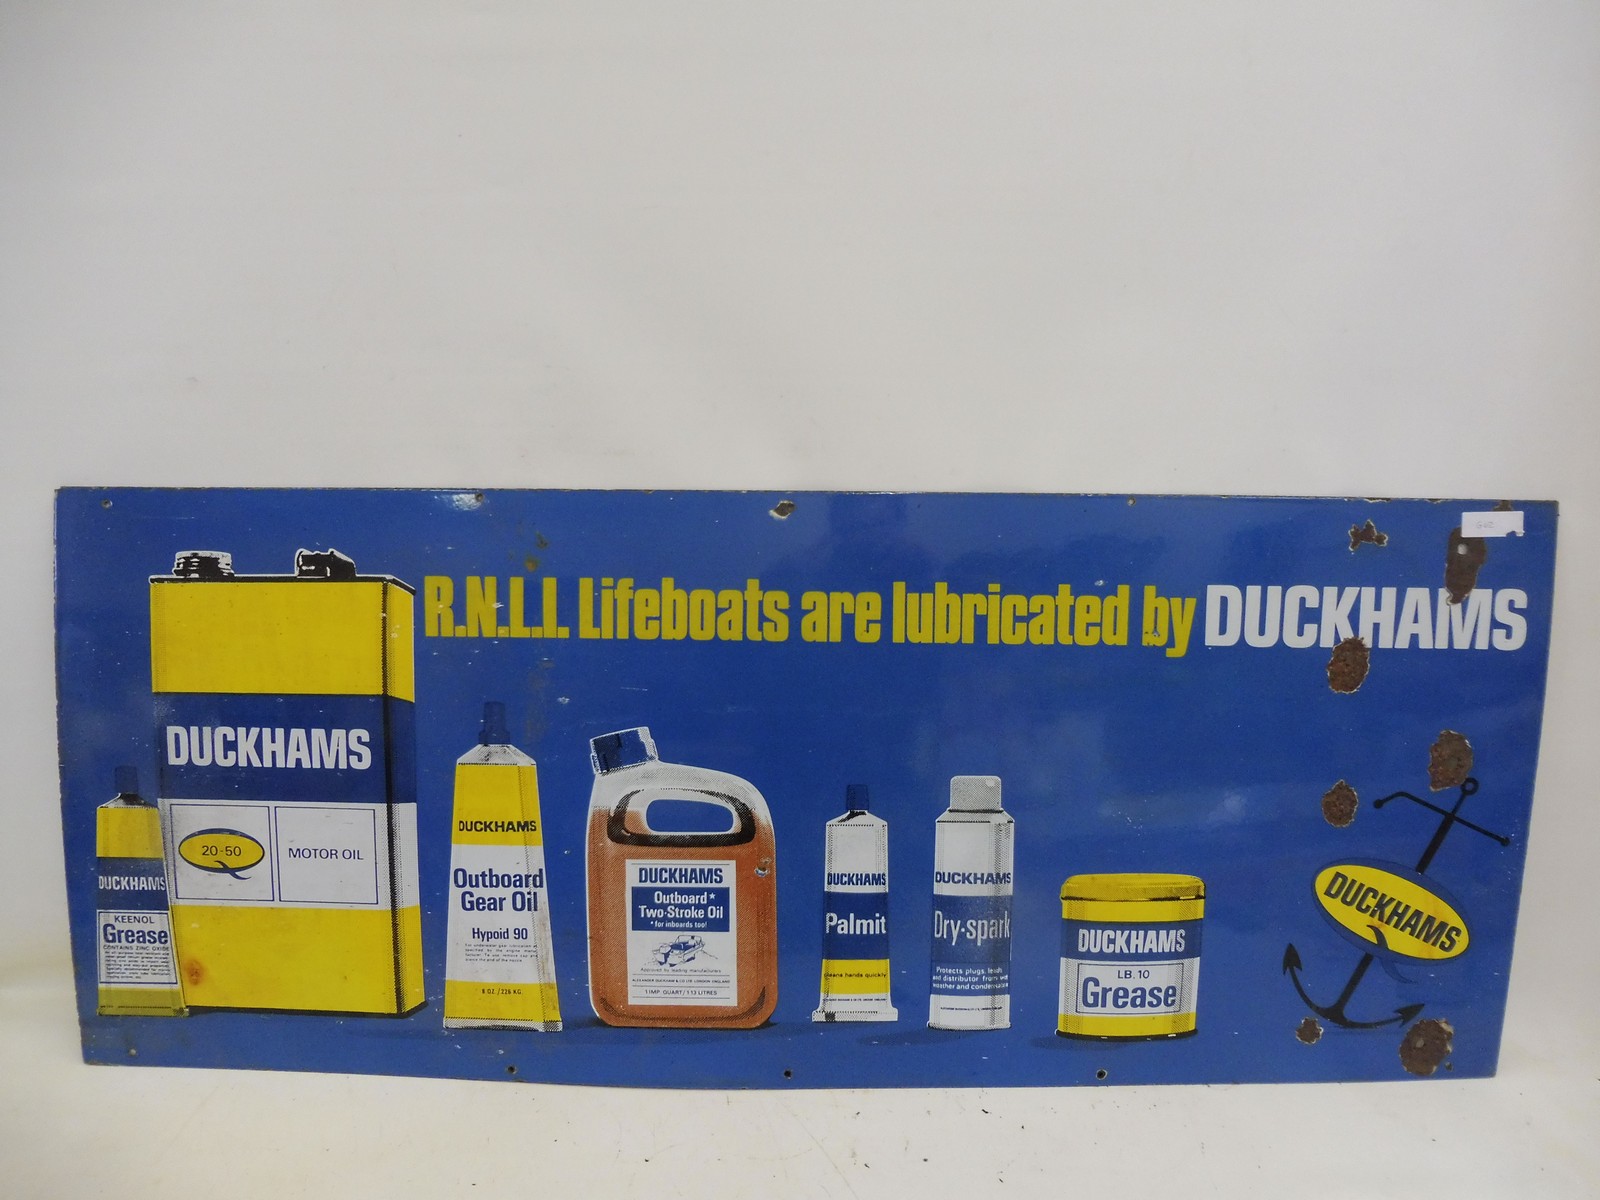 A Duckhams RNLI Lifeboats pictorial rectangular enamel sign, 54 x 22".